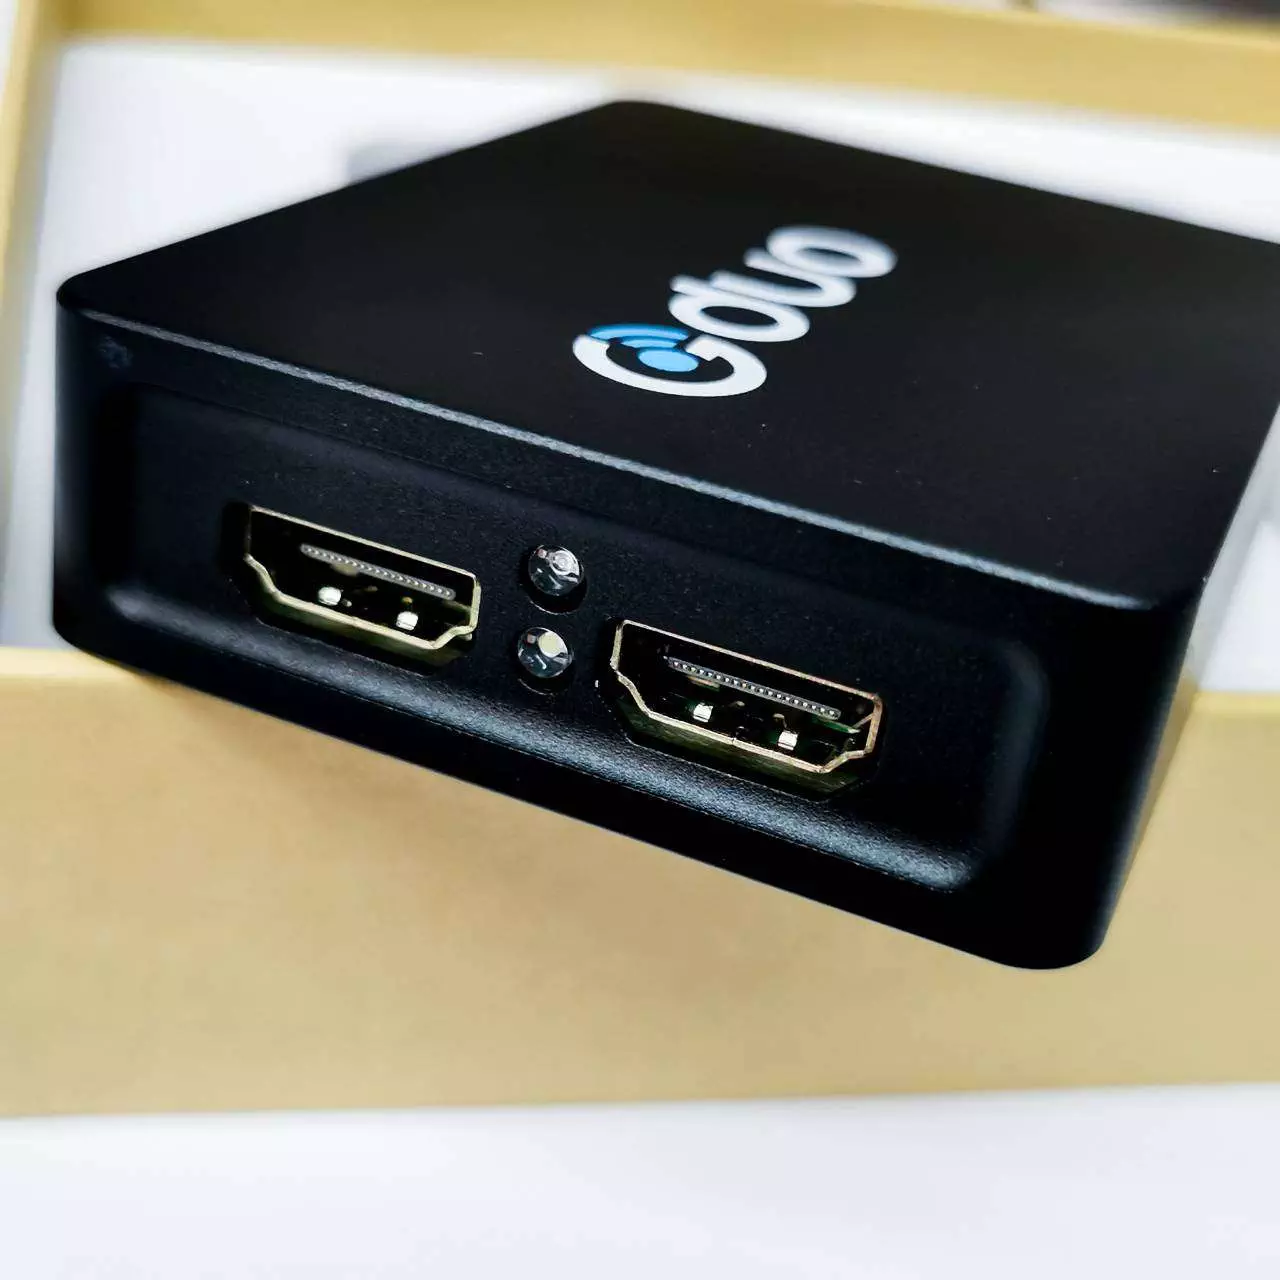 Gera DUO 2 HDMI USB3.0 Video Capture Card 1080P